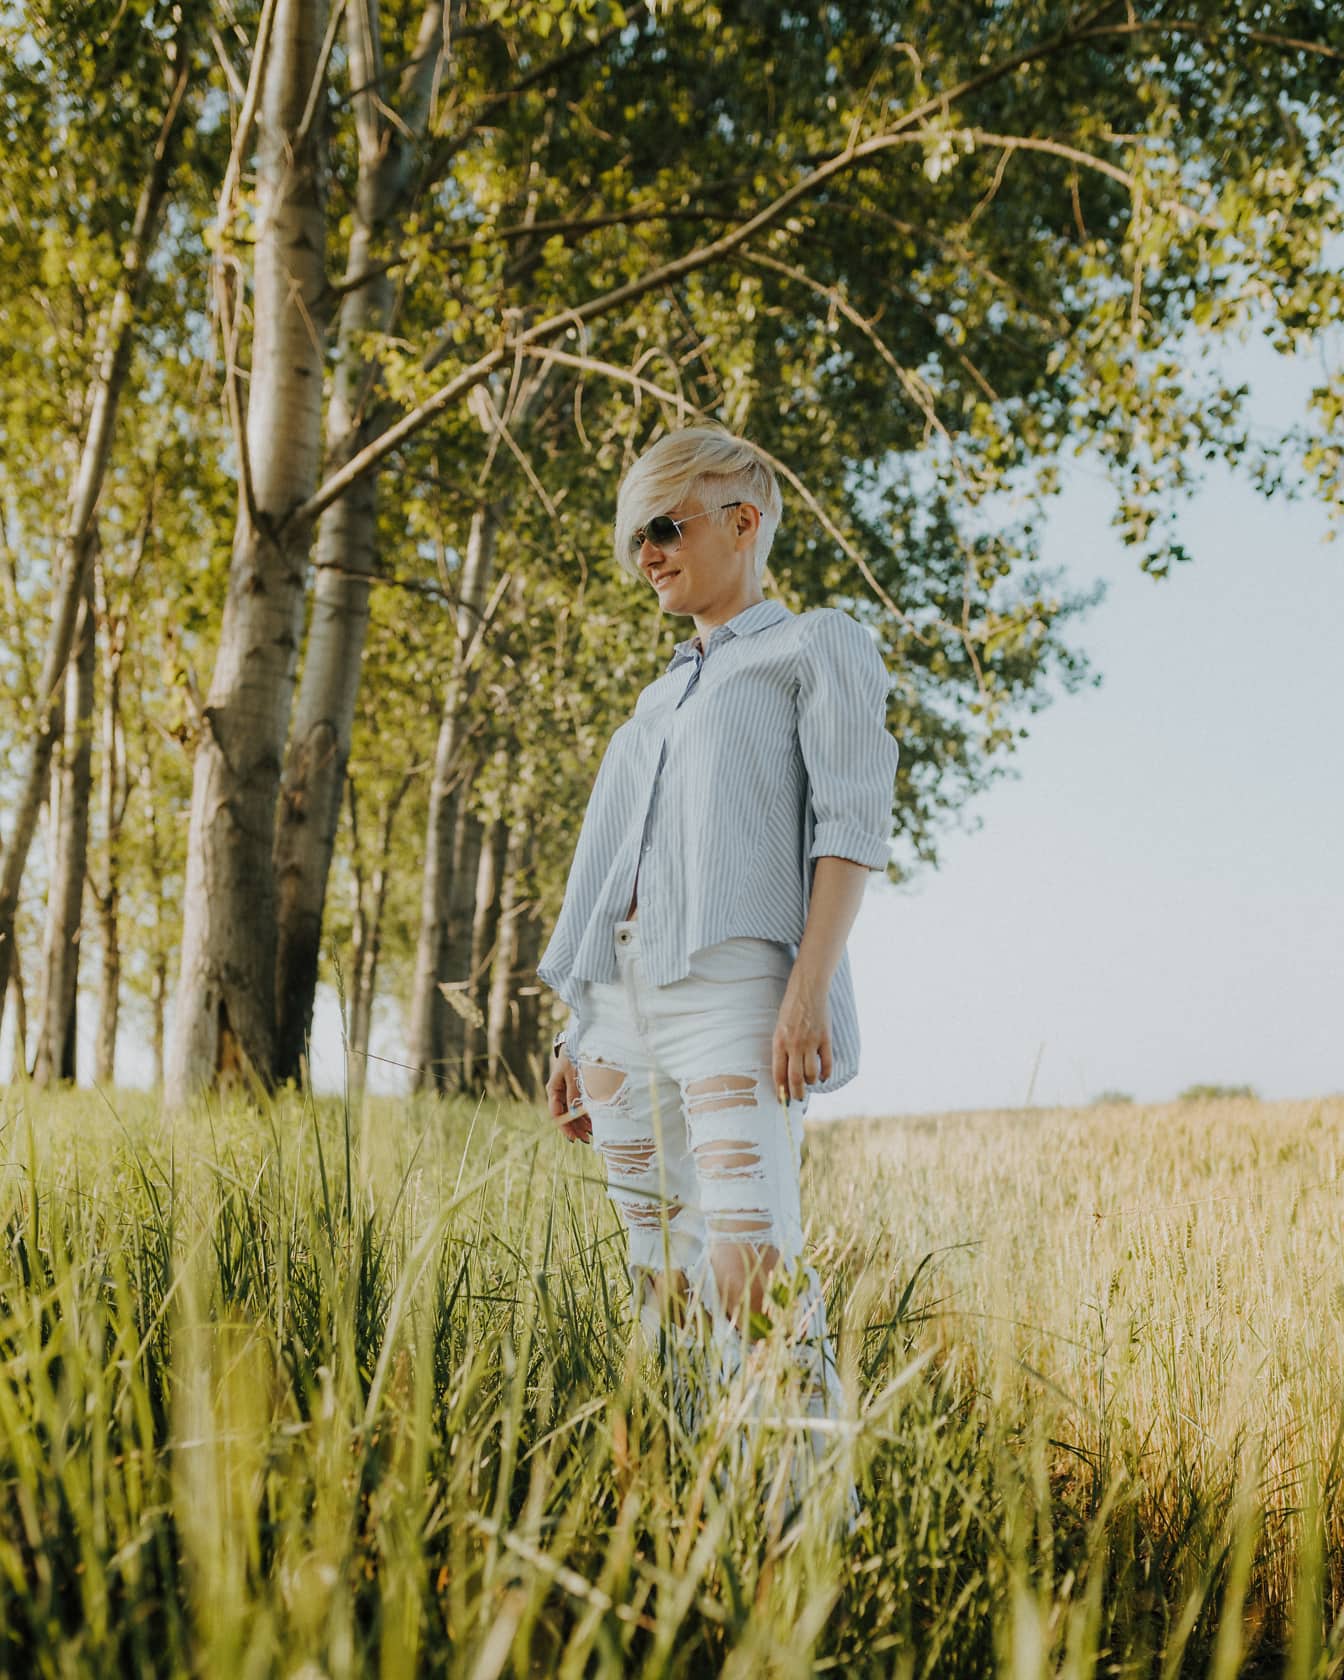 Donna in pantaloni bianchi casual e camicia blu in campagna in una giornata di sole